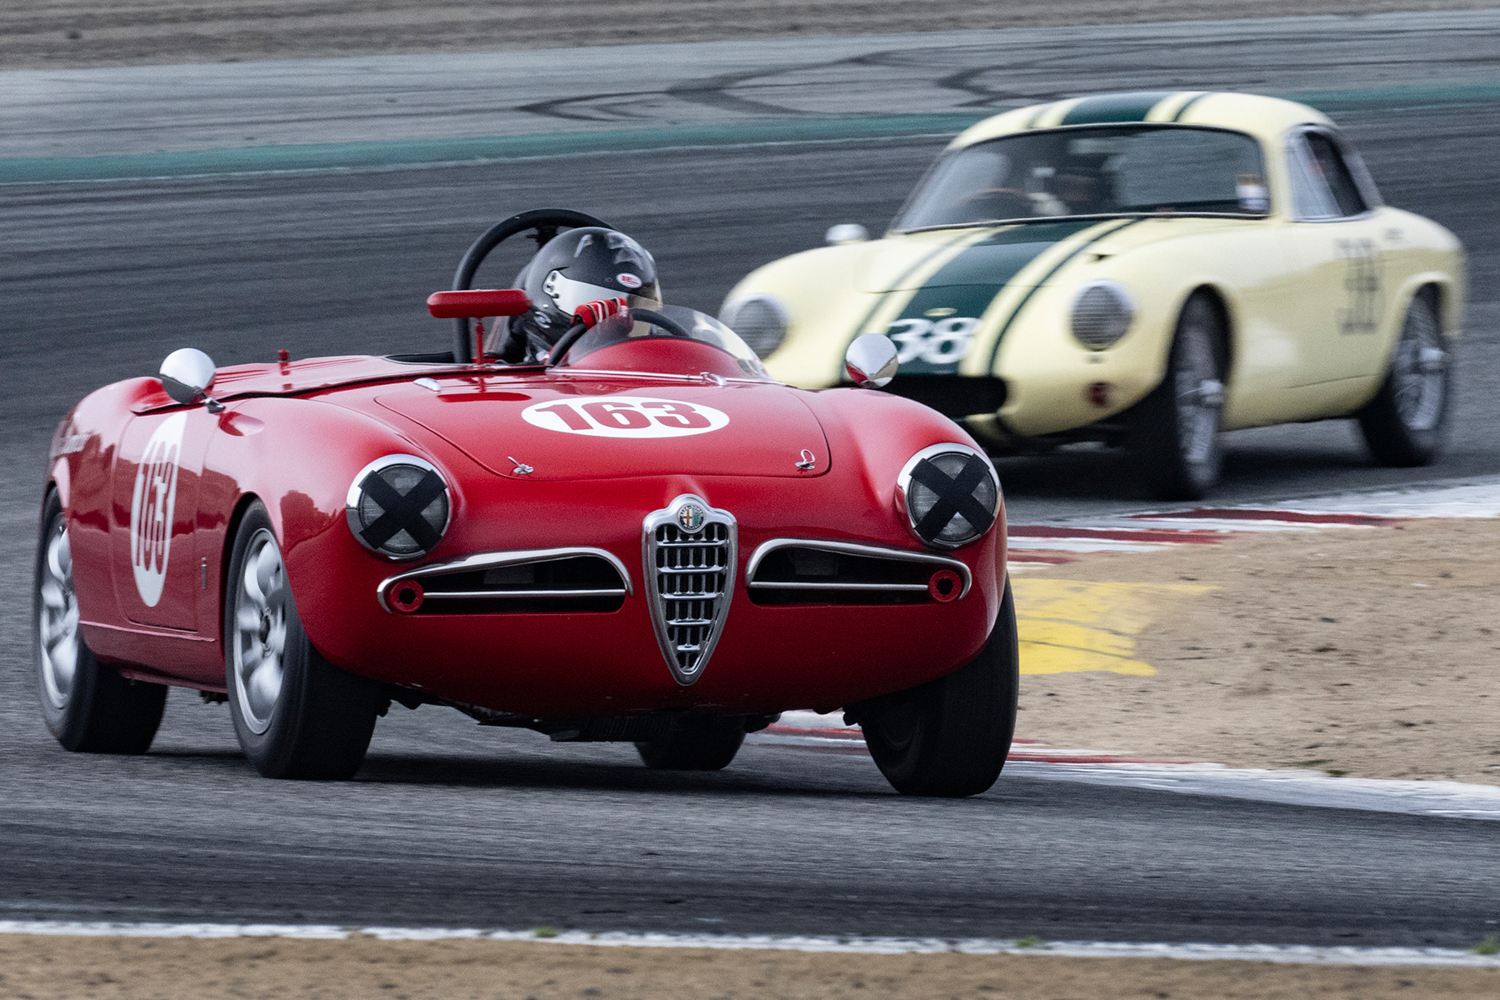 Robert Stoker - 1956 Alfa Romeo Giulietta Spider Dennis Gray